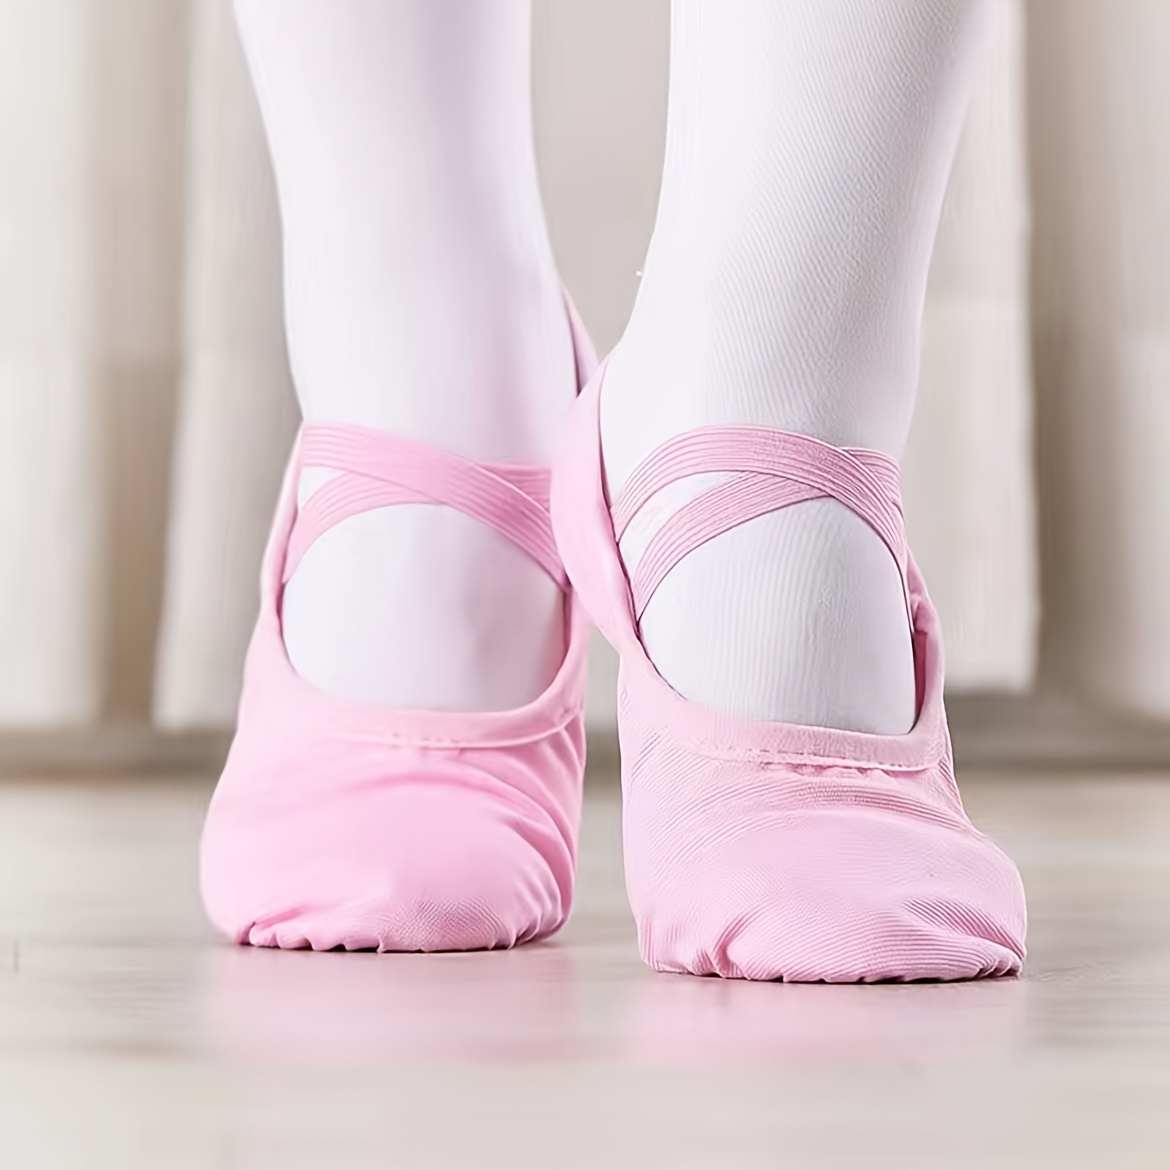 Zapatos de ballet para niñas pequeñas con suela de piel de vaca, zapatillas  de ballet de lona duraderas, Calzado de niña, ideal para ballet